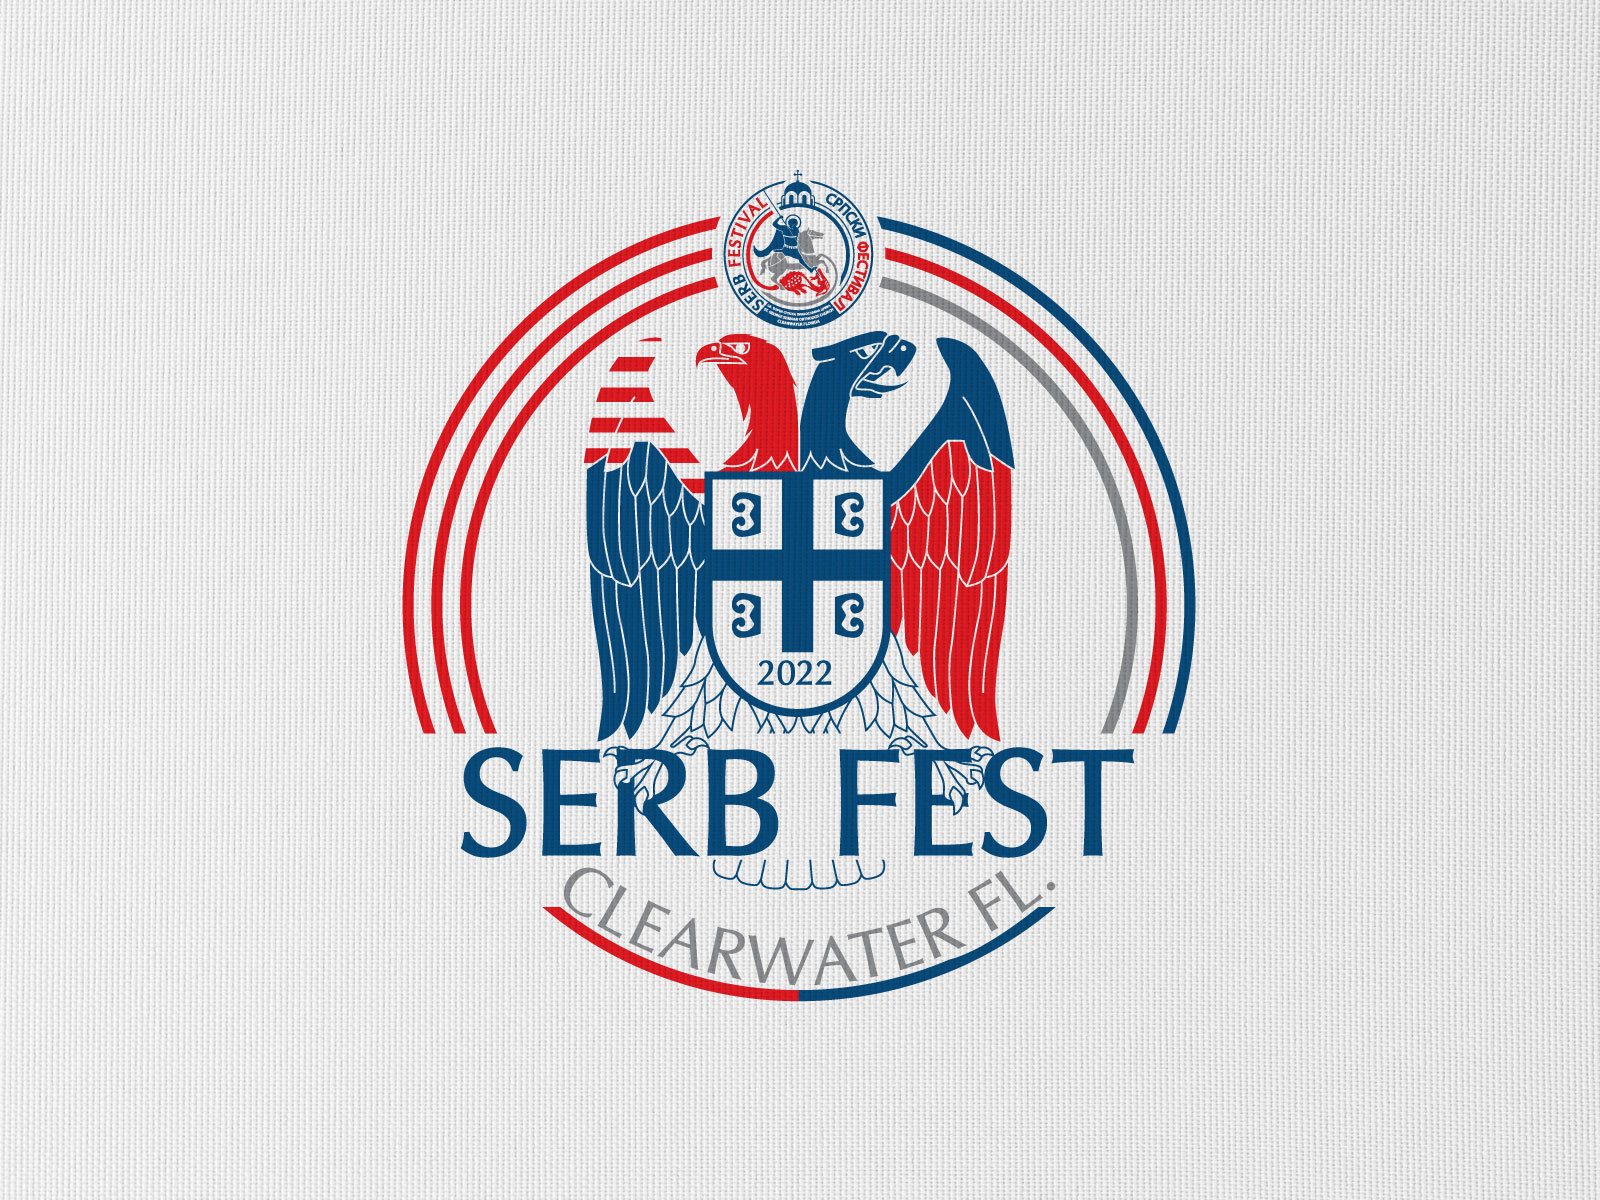 Serb Fest Clearwater, Florida / Tshirt Design by Rade Stjepanović on